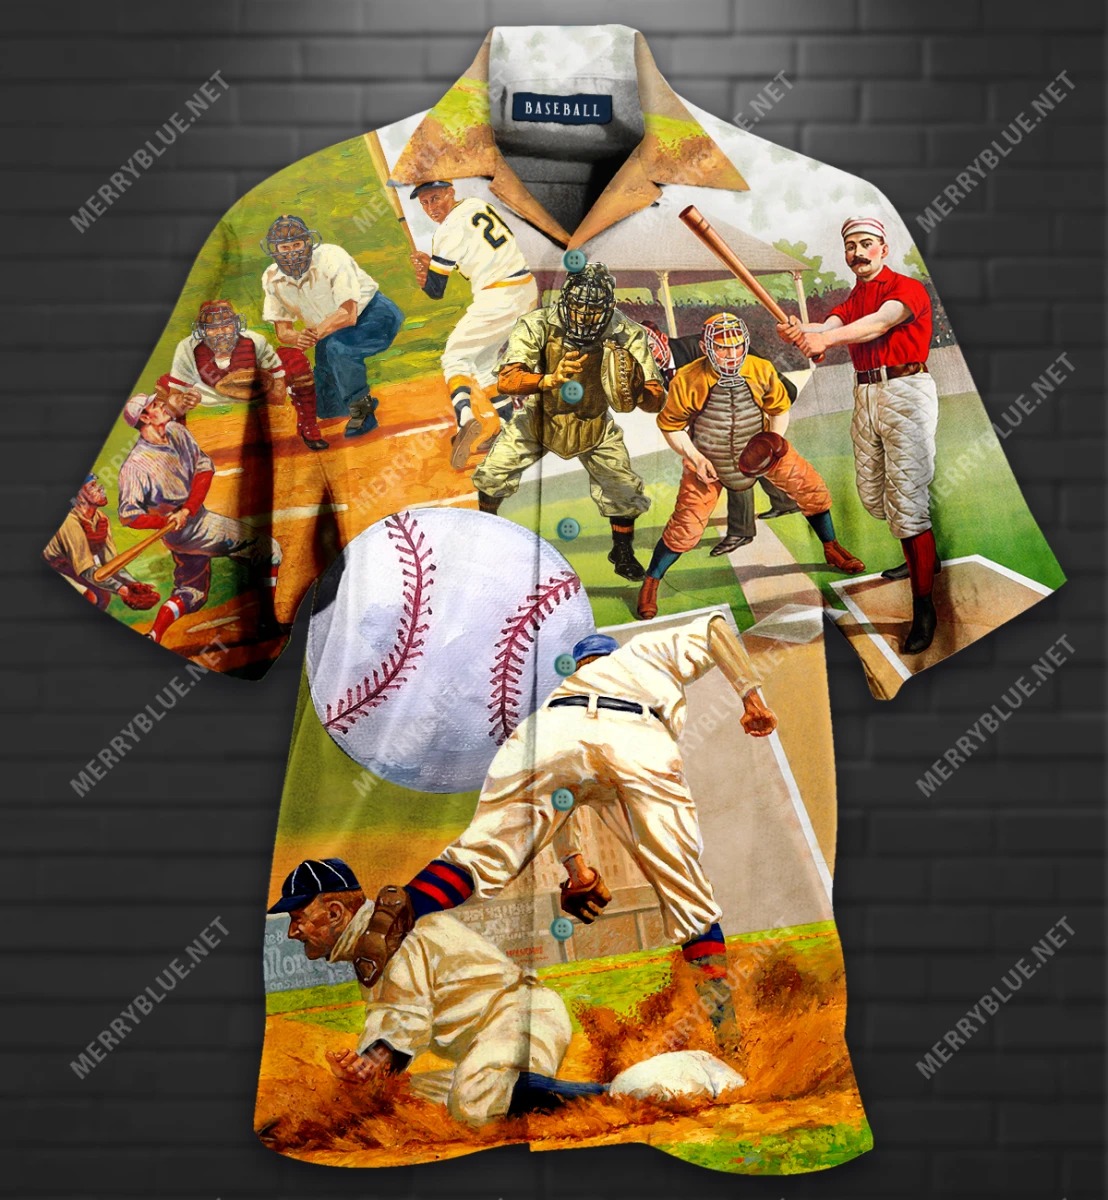 Playing Baseball Short Sleeve Shirt 1 1